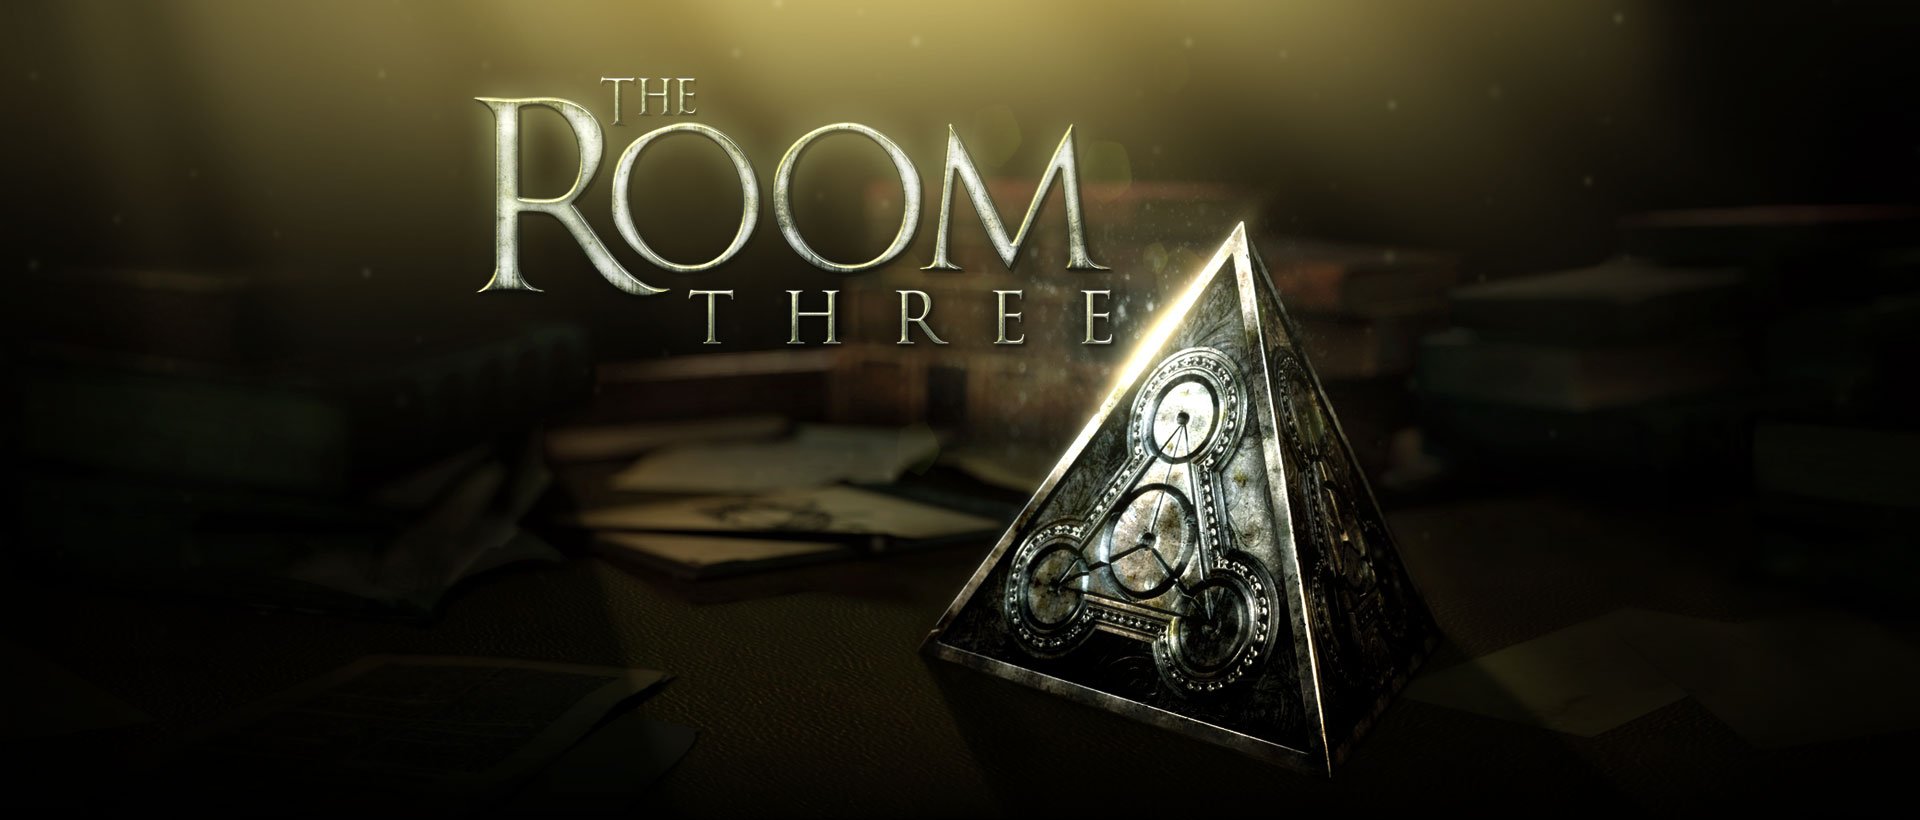 The Room Three1